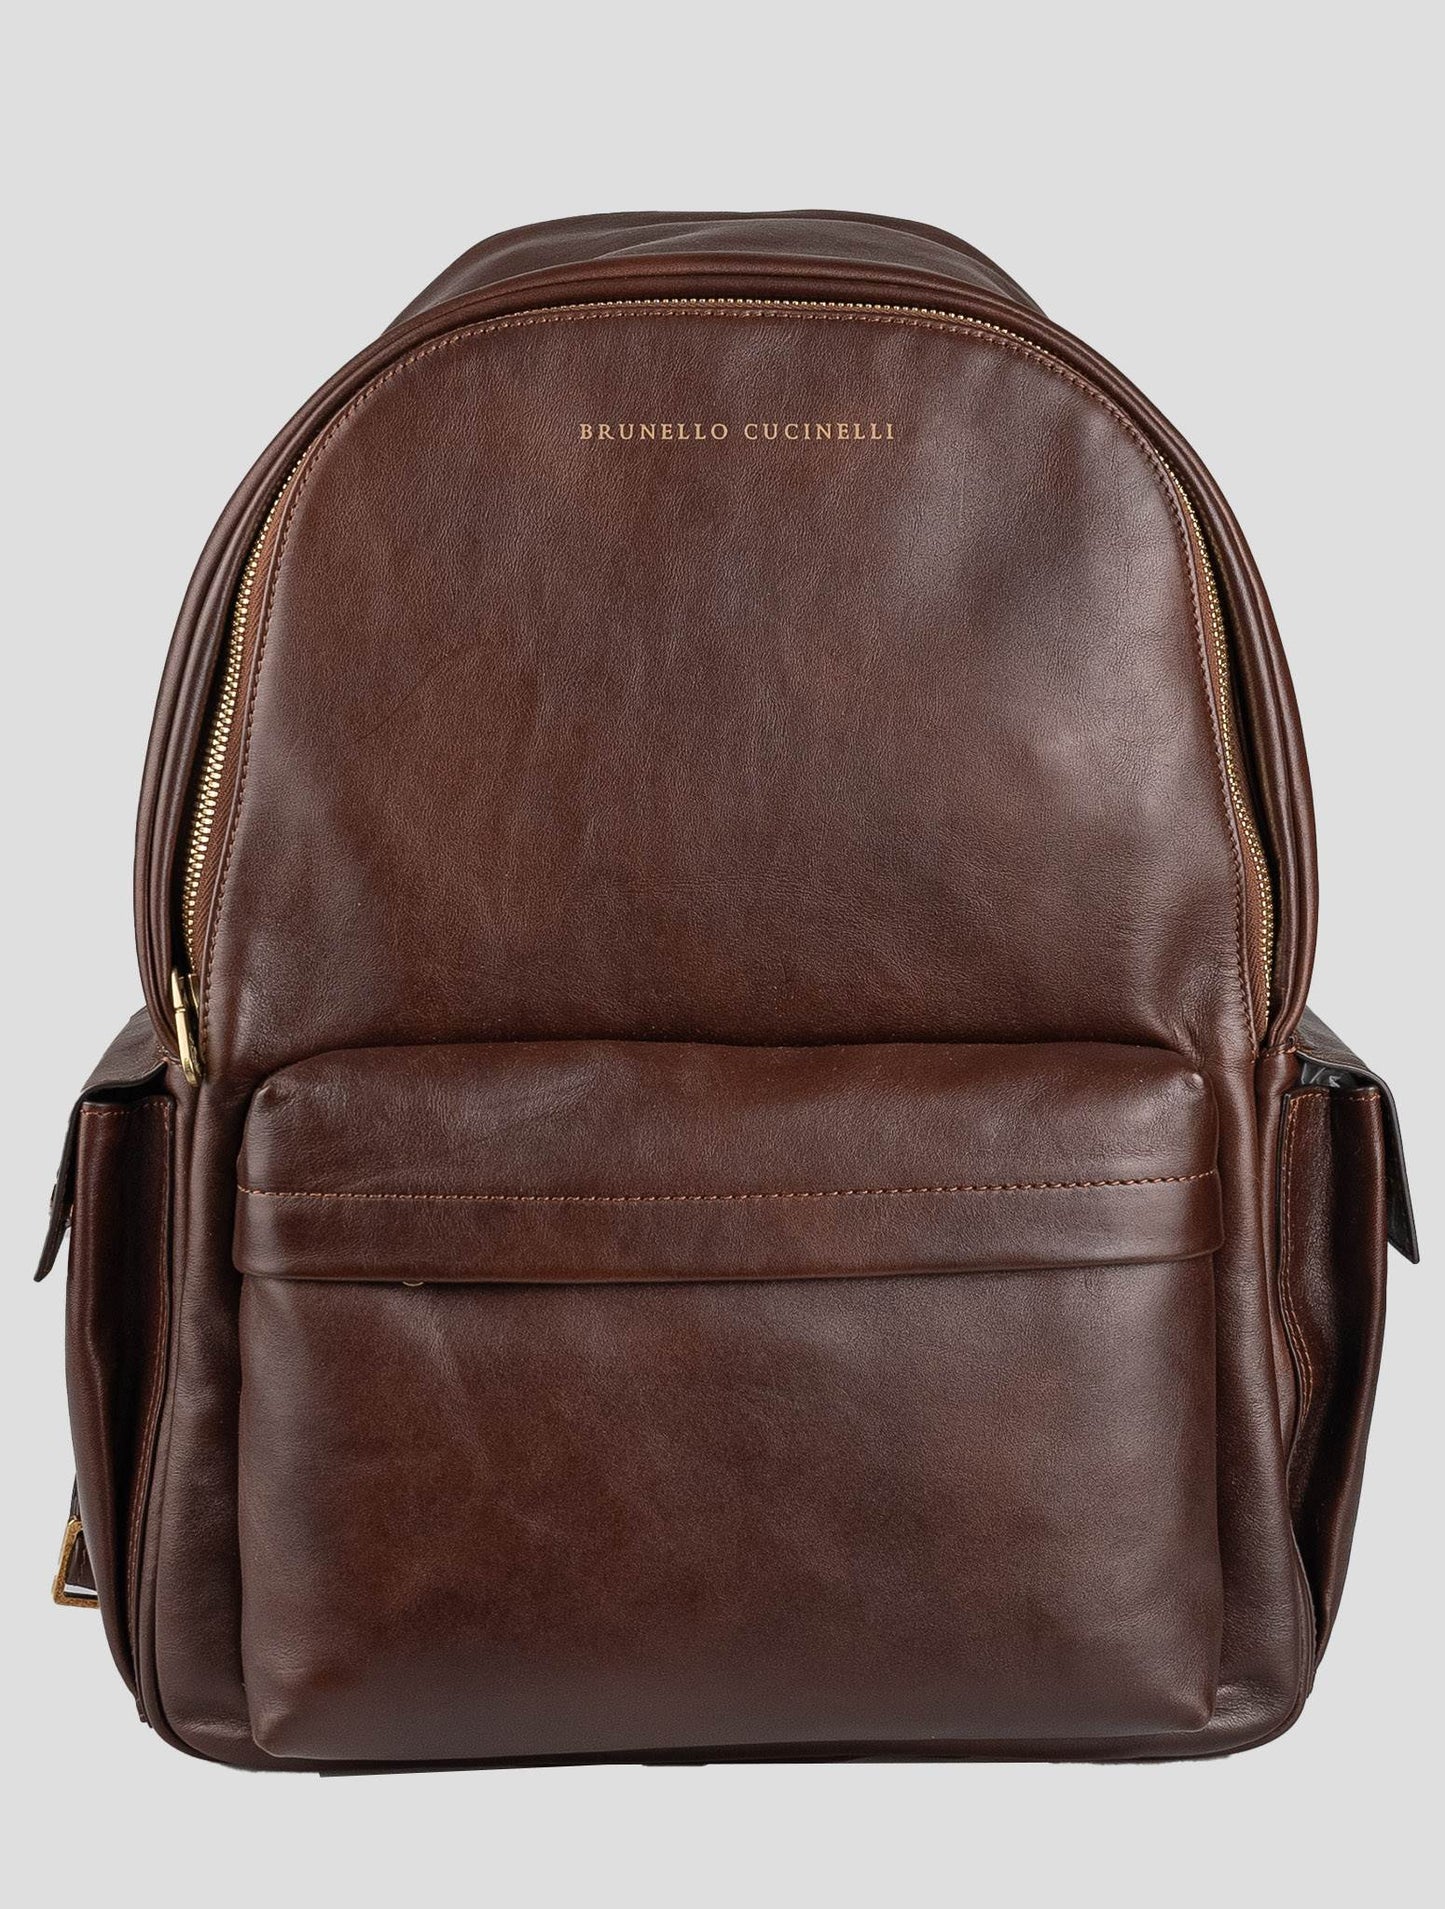 Brunello Cucinelli brun læder rygsæk